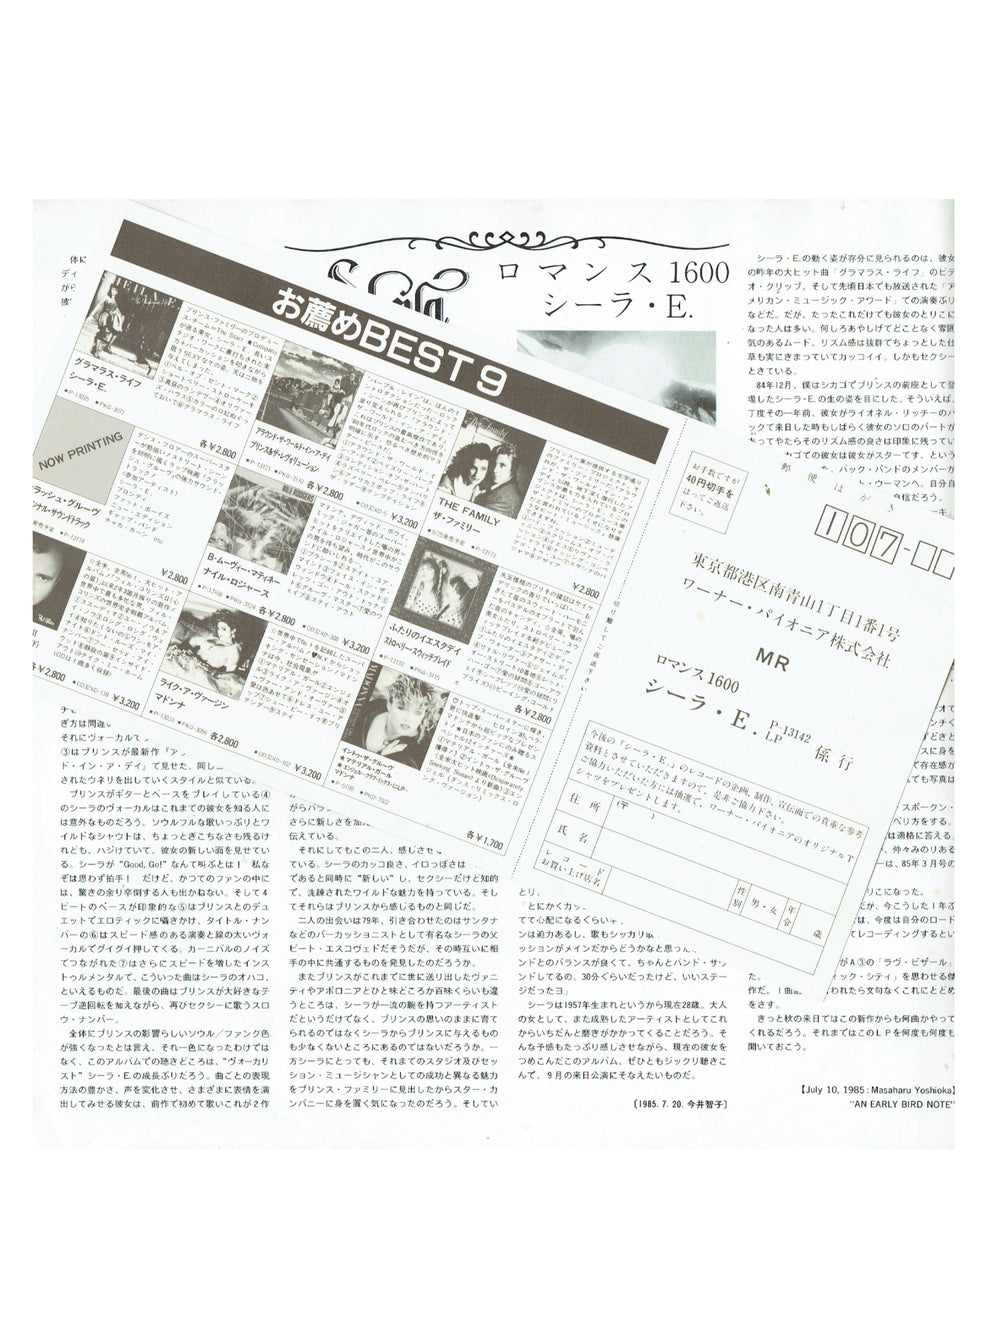 Prince – Sheila E In Romance 1600 Japan Vinyl Album With OBI Strip & Insert Prince